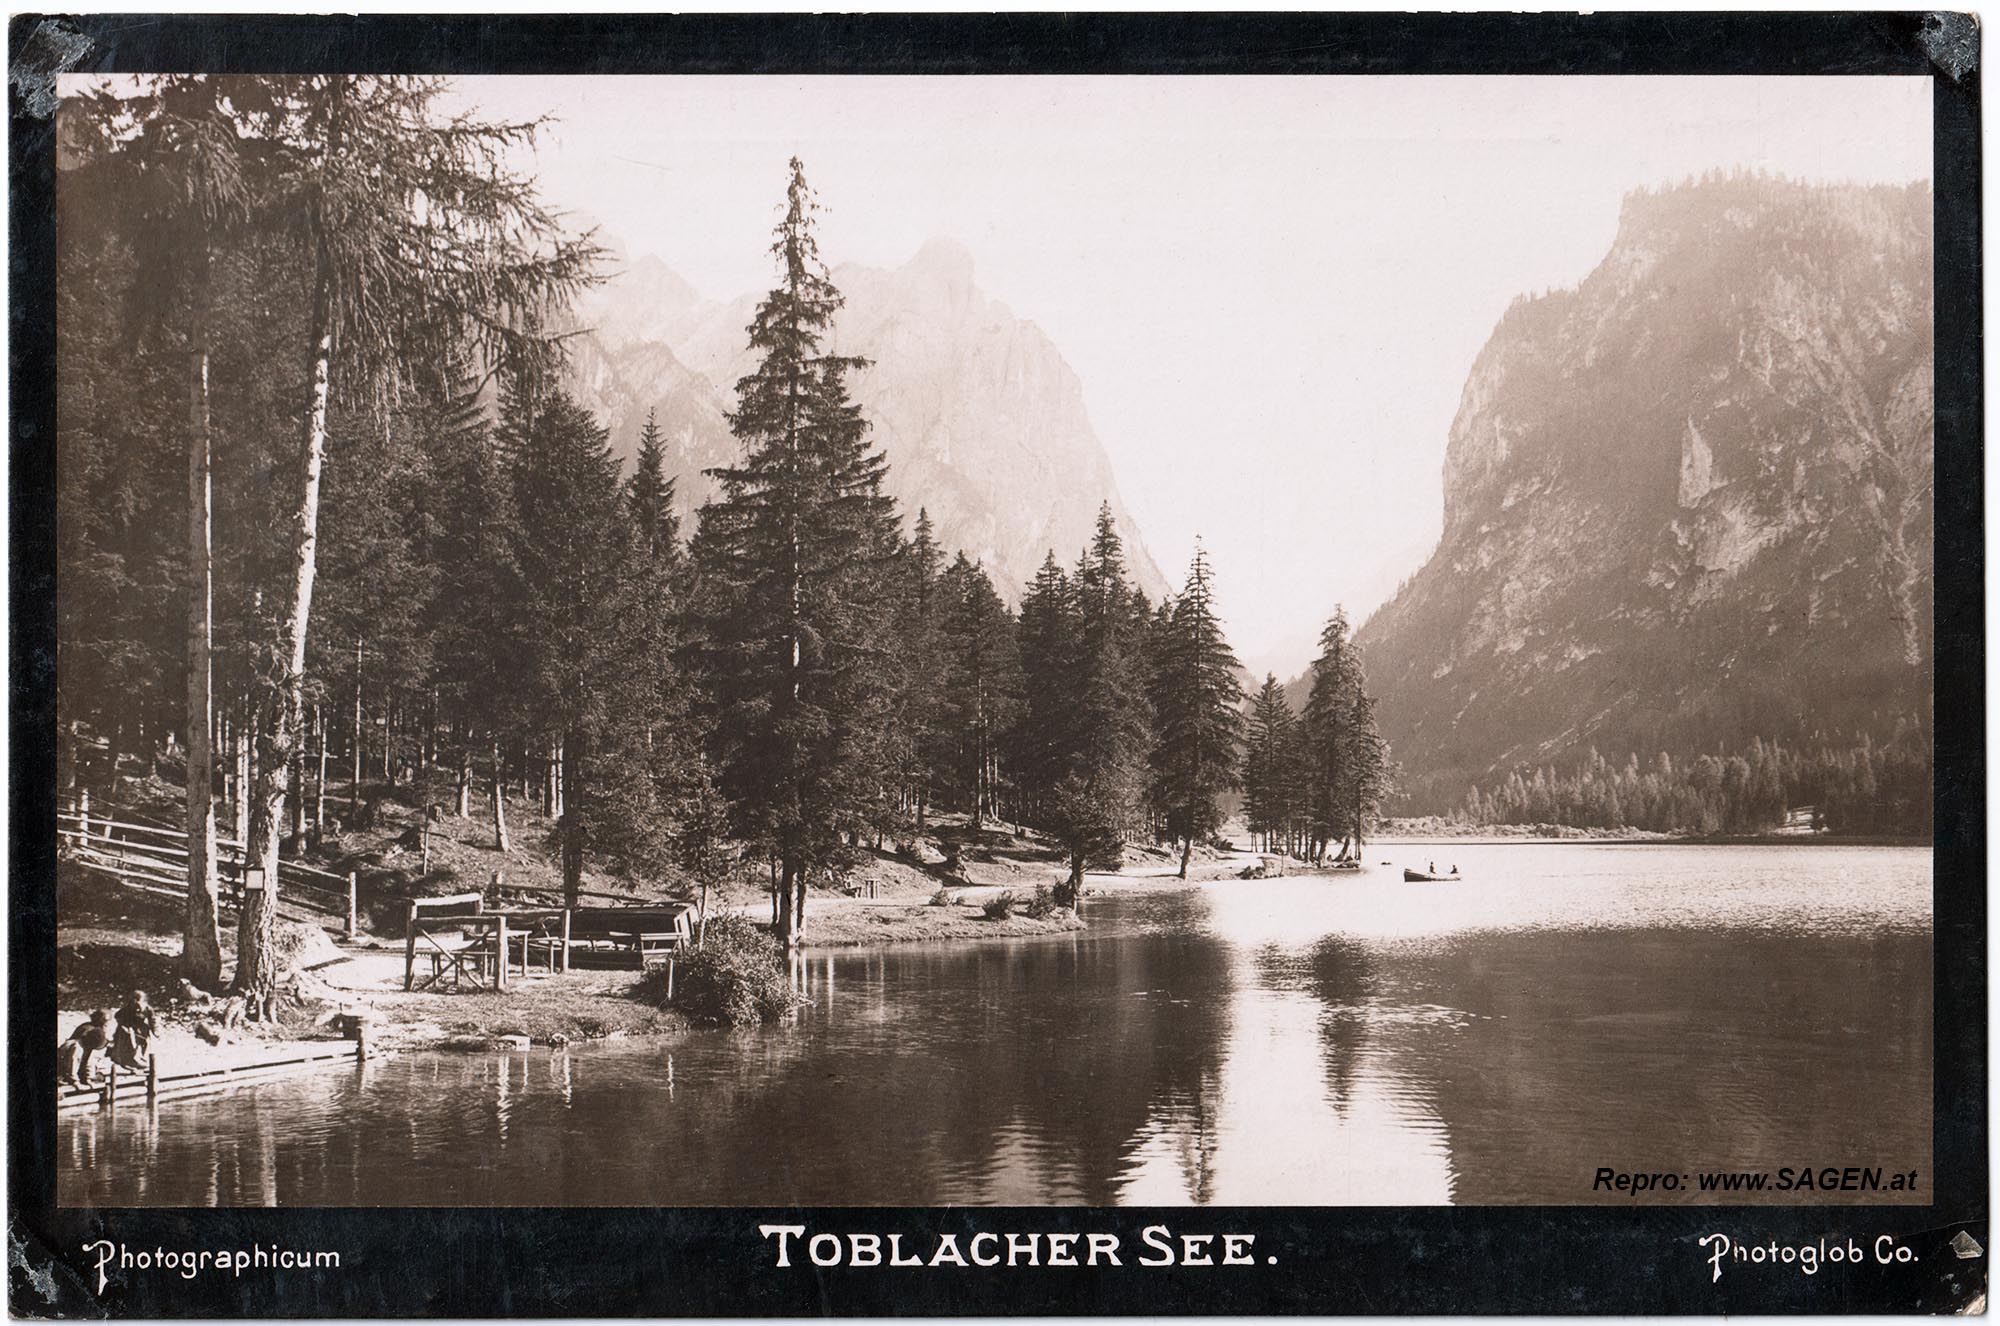 Toblacher See Photoglob 1890er Jahre